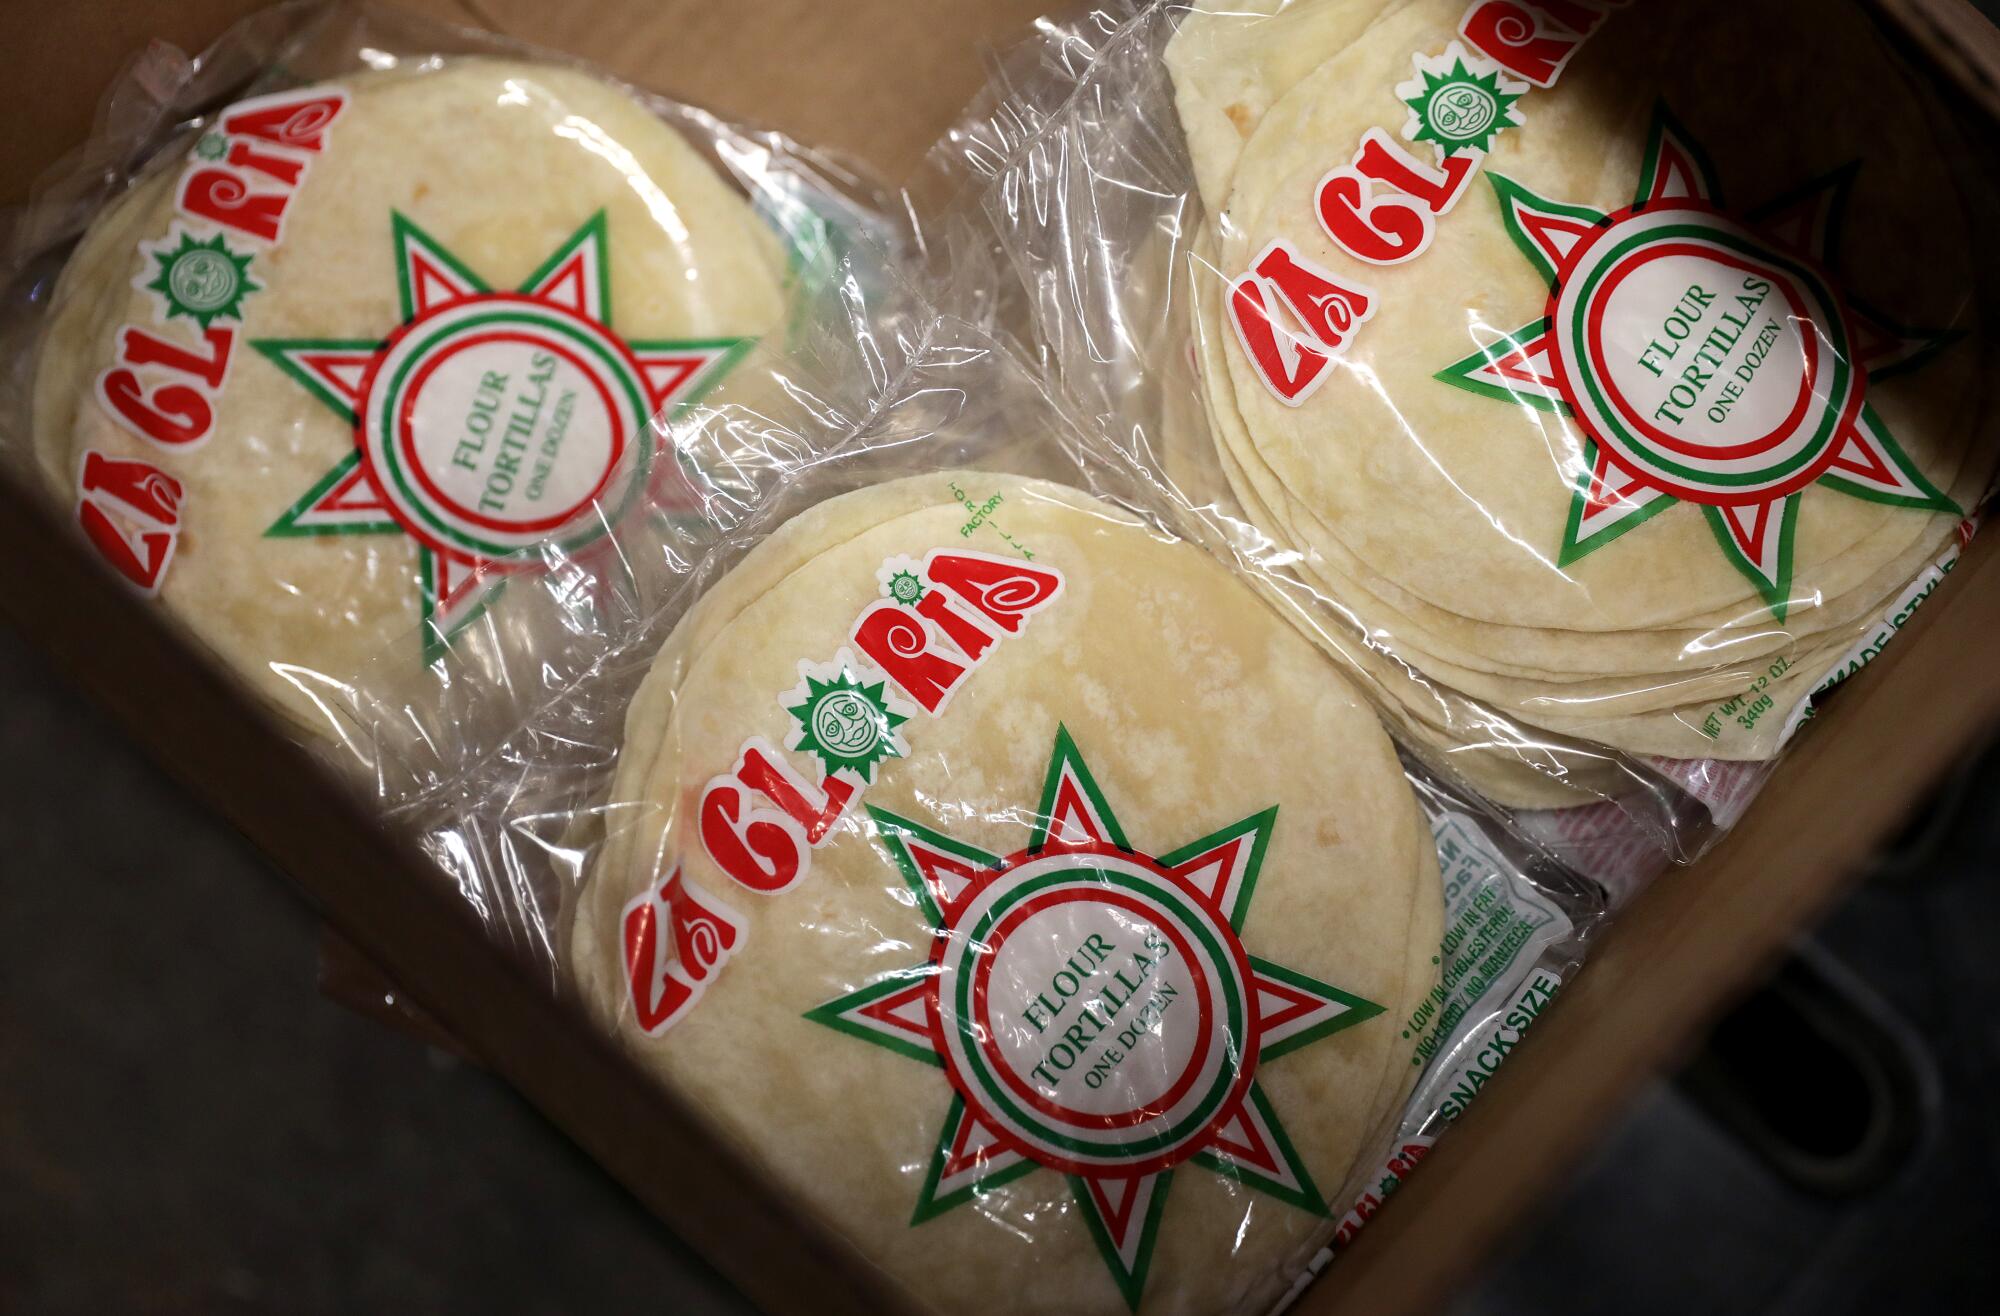 Flour tortillas inside bags that say "La Glorida" with festive designs